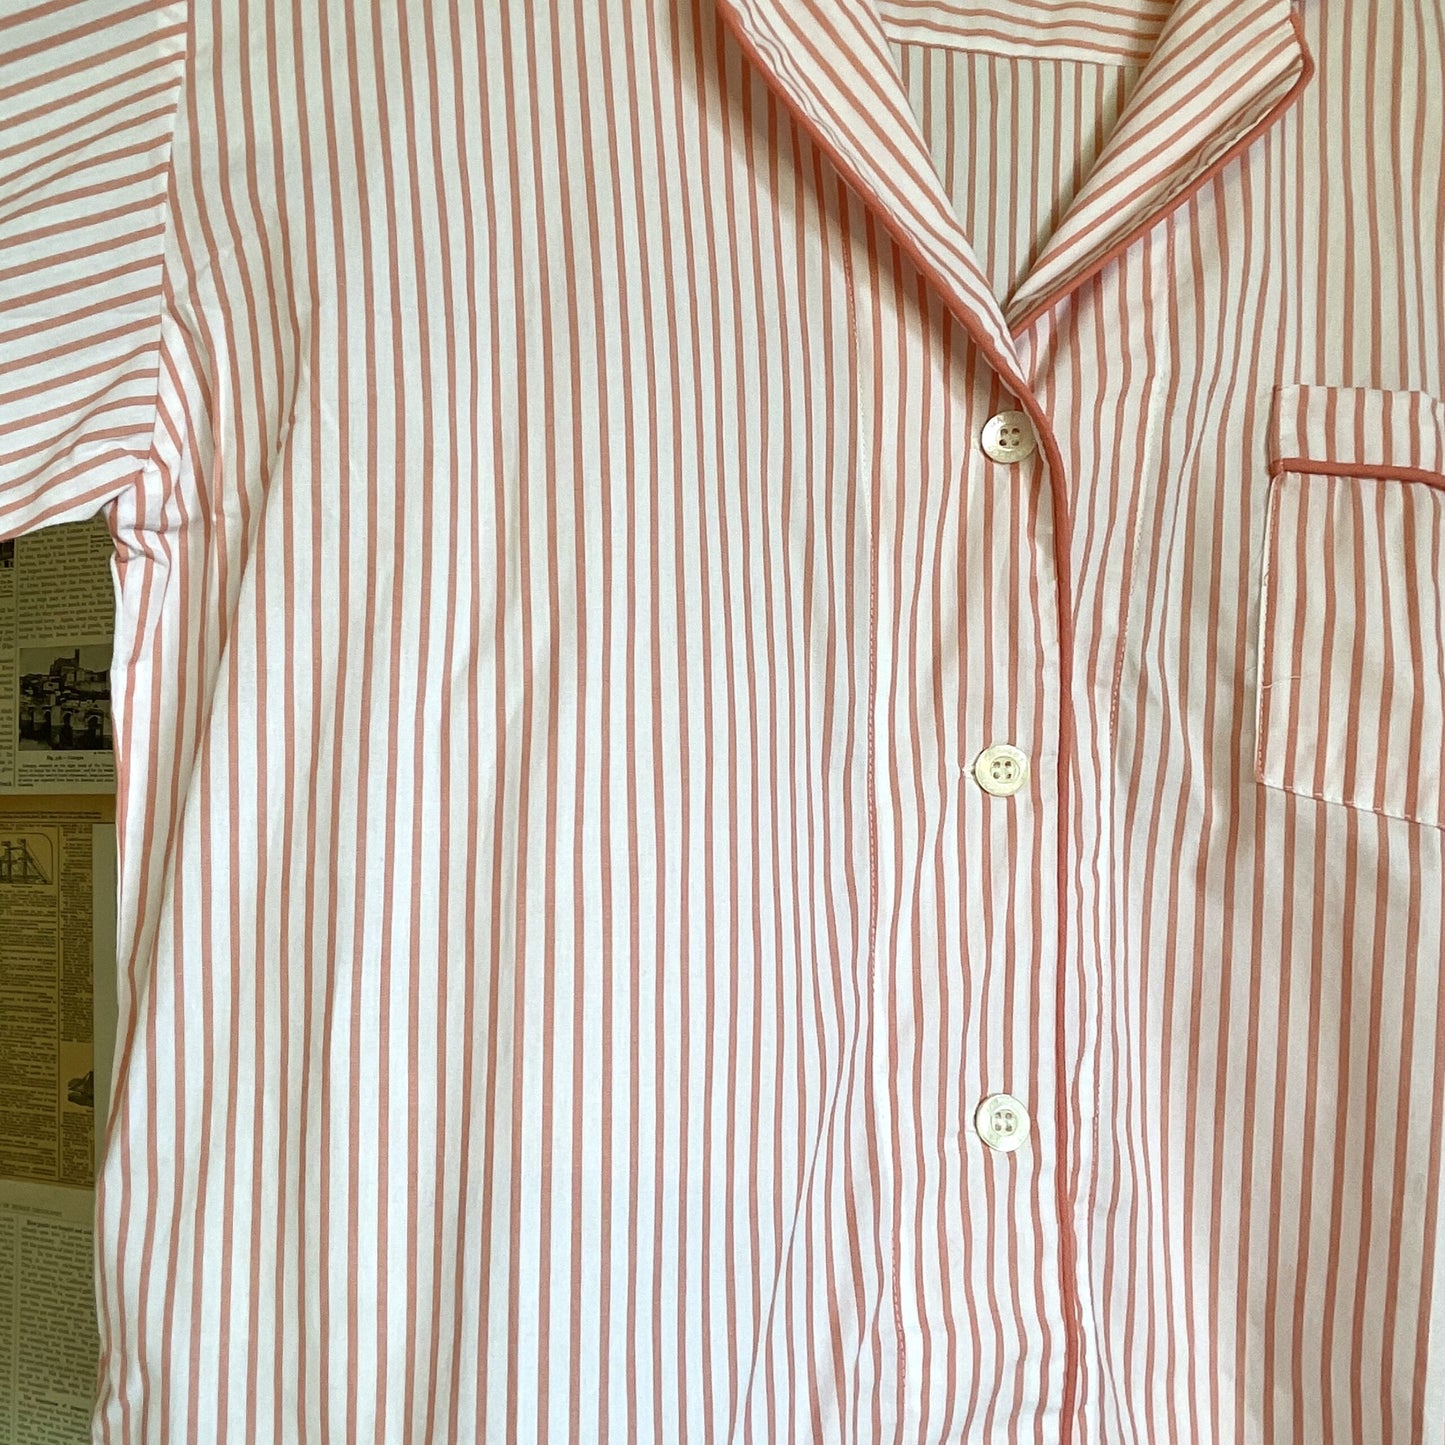 Amboise Coral Stripe Pajama Set, Large